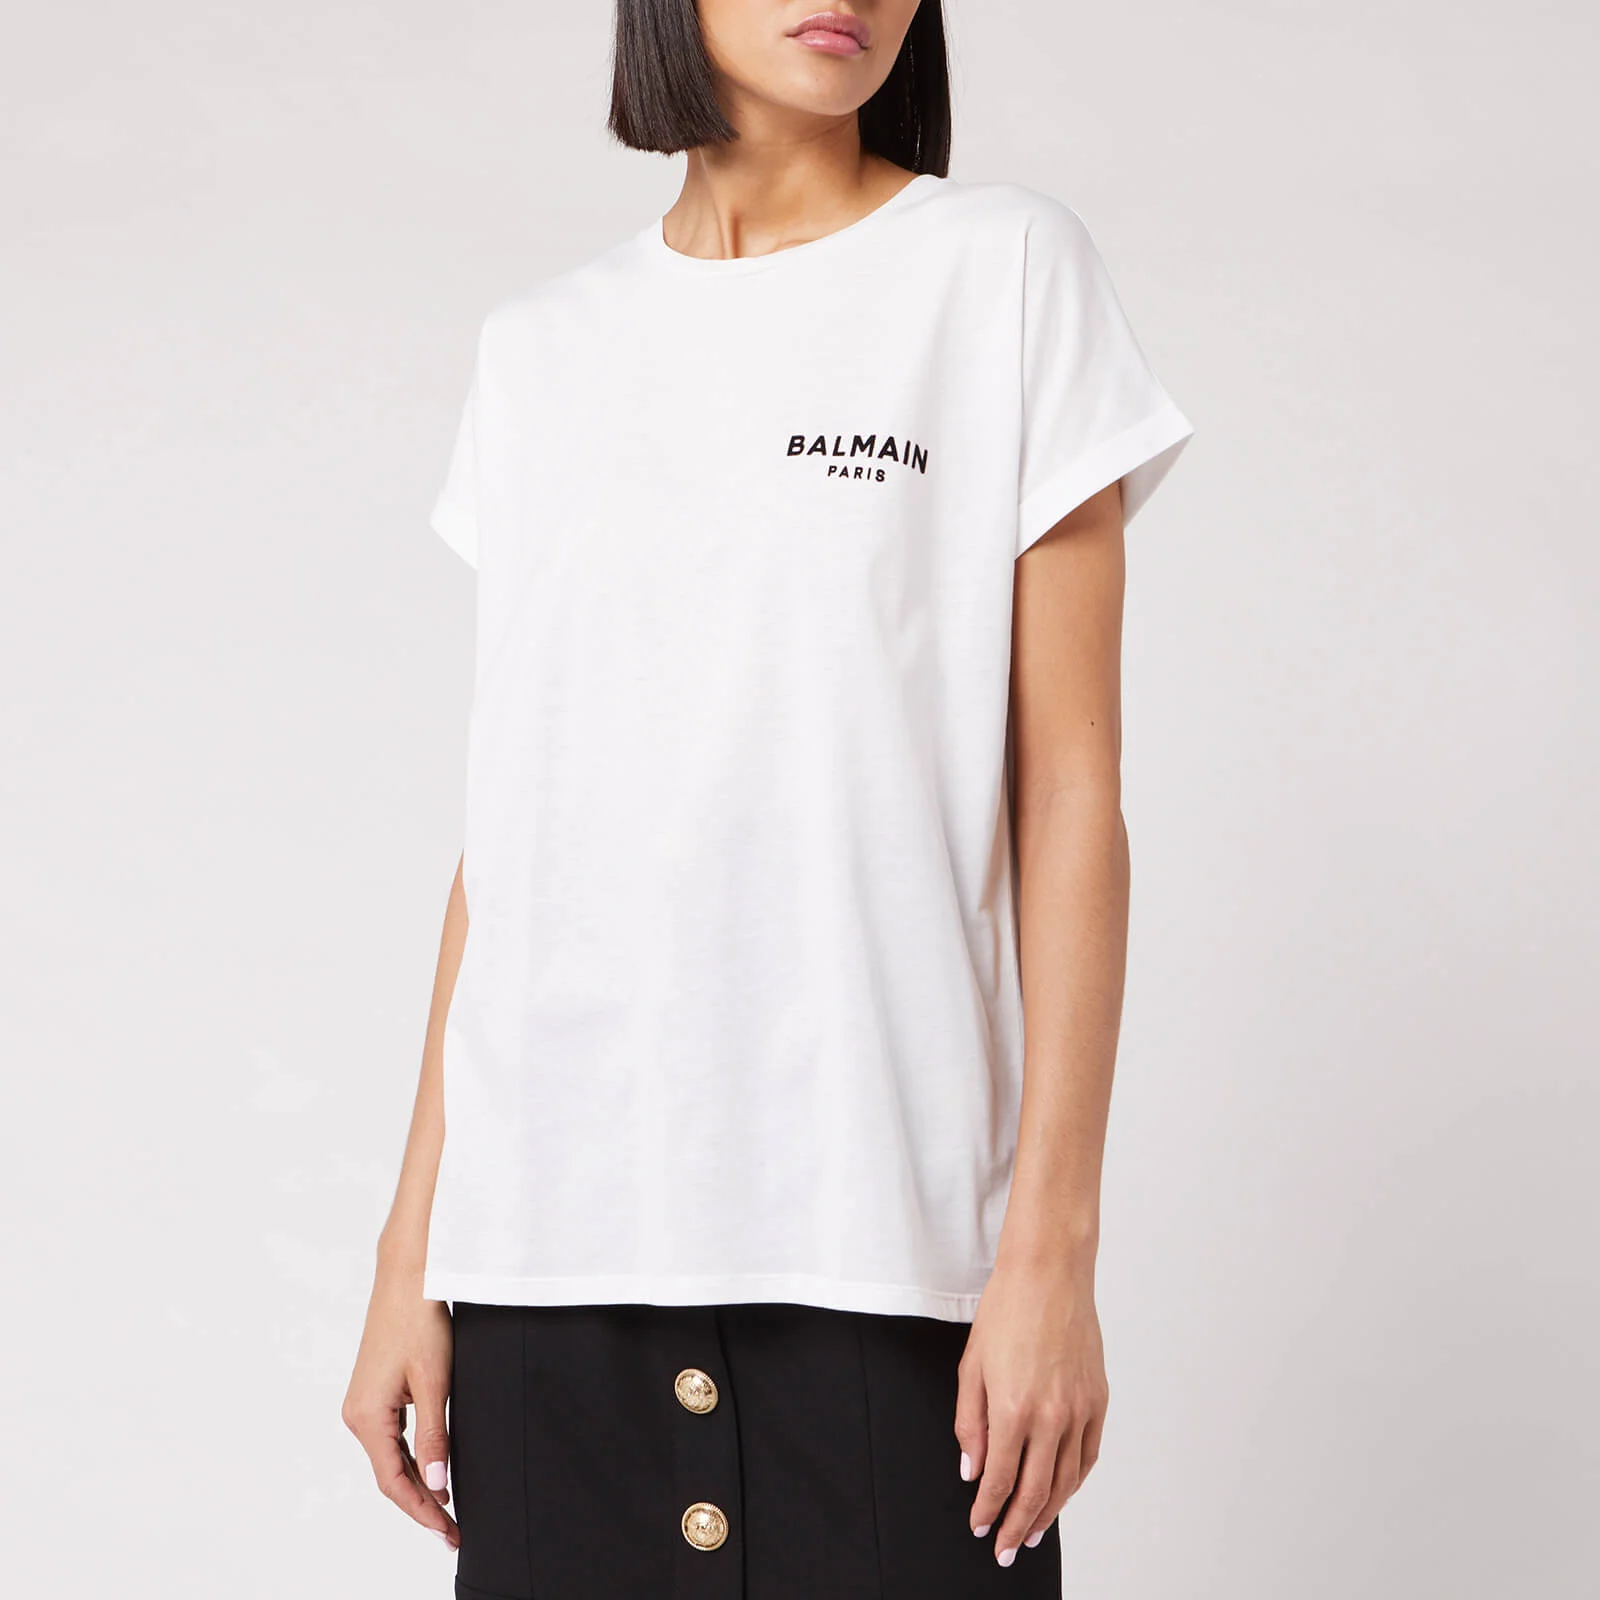 Balmain Women's Short Sleeve Flocked Logo Detail T-Shirt - White Image 1